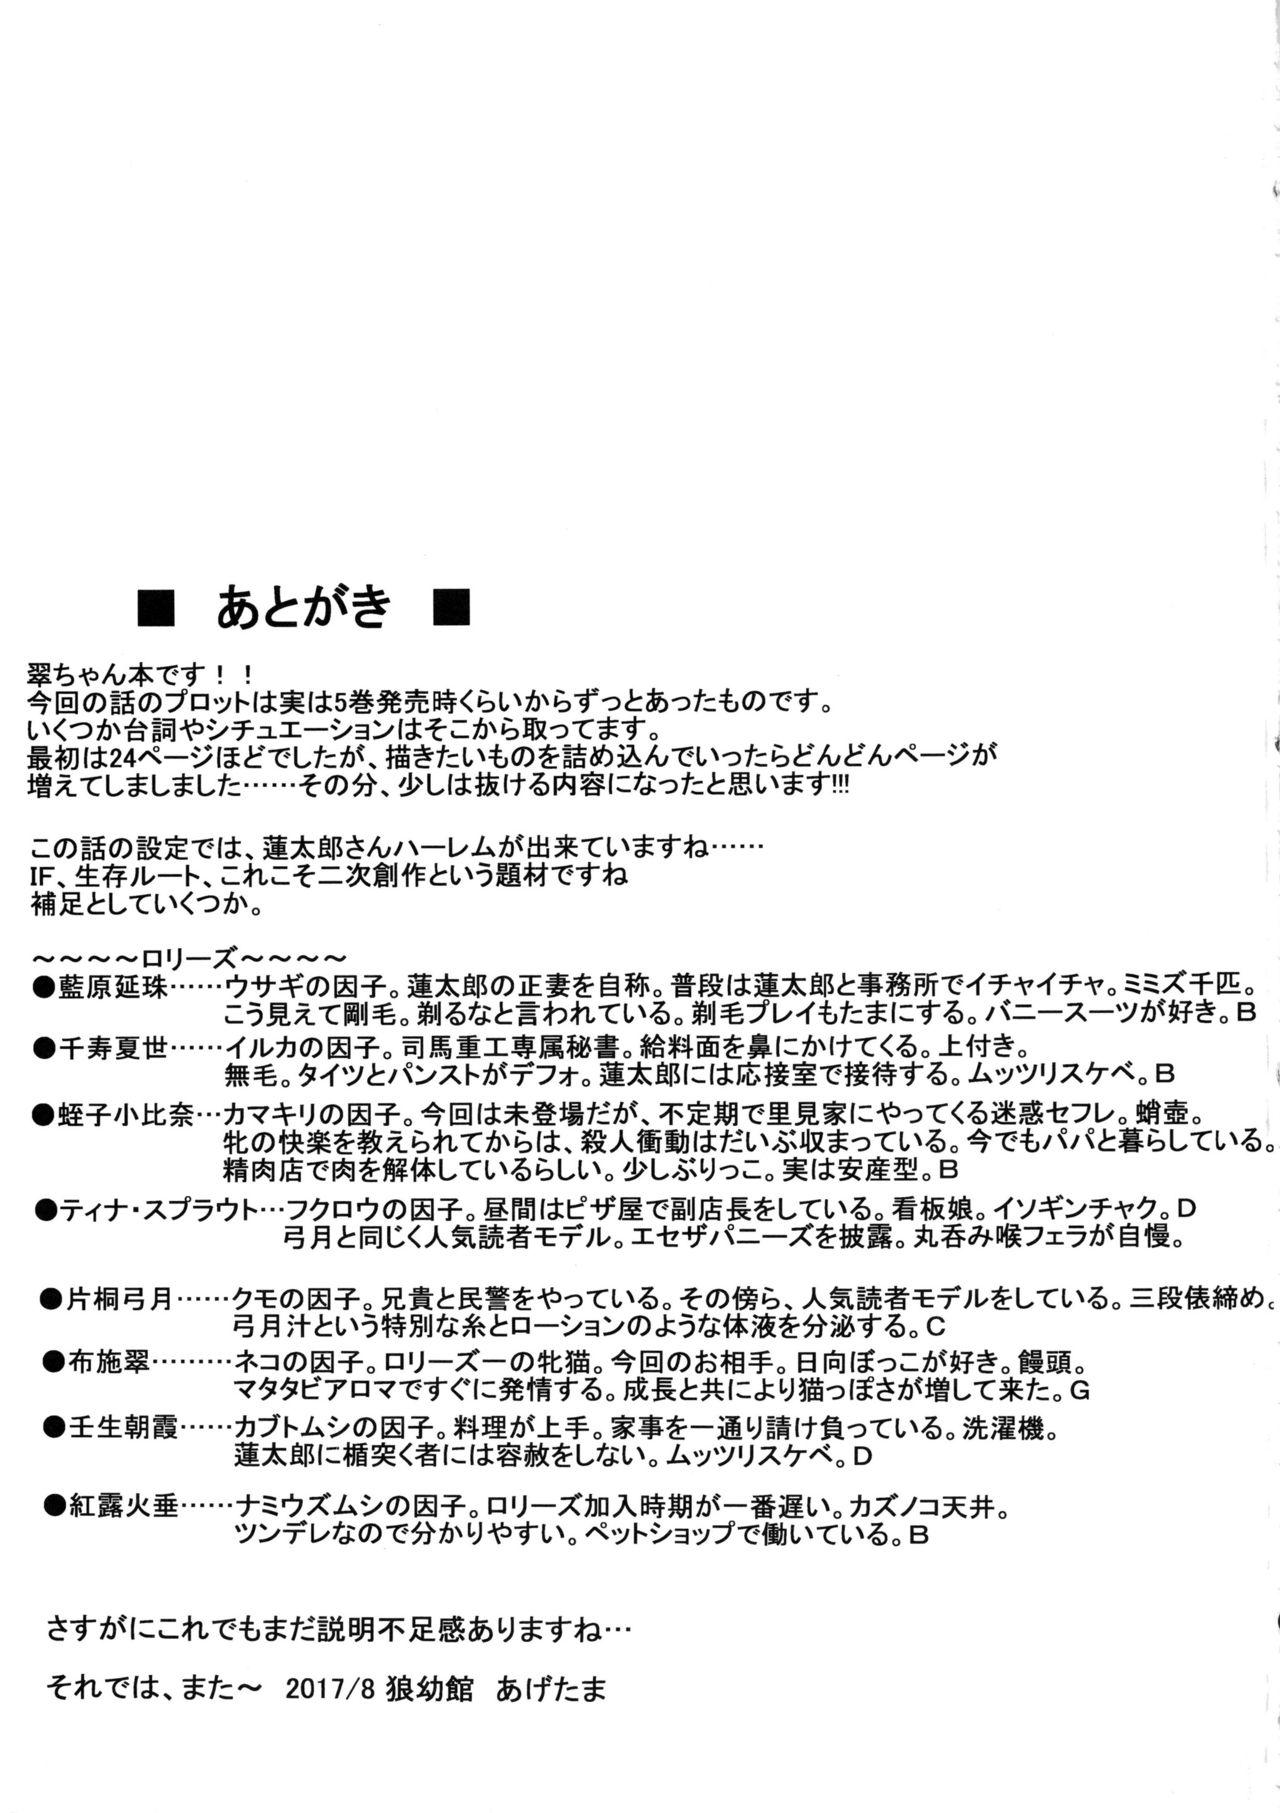 Lolies Seitai Chousa File 01 Fuse Midori 27